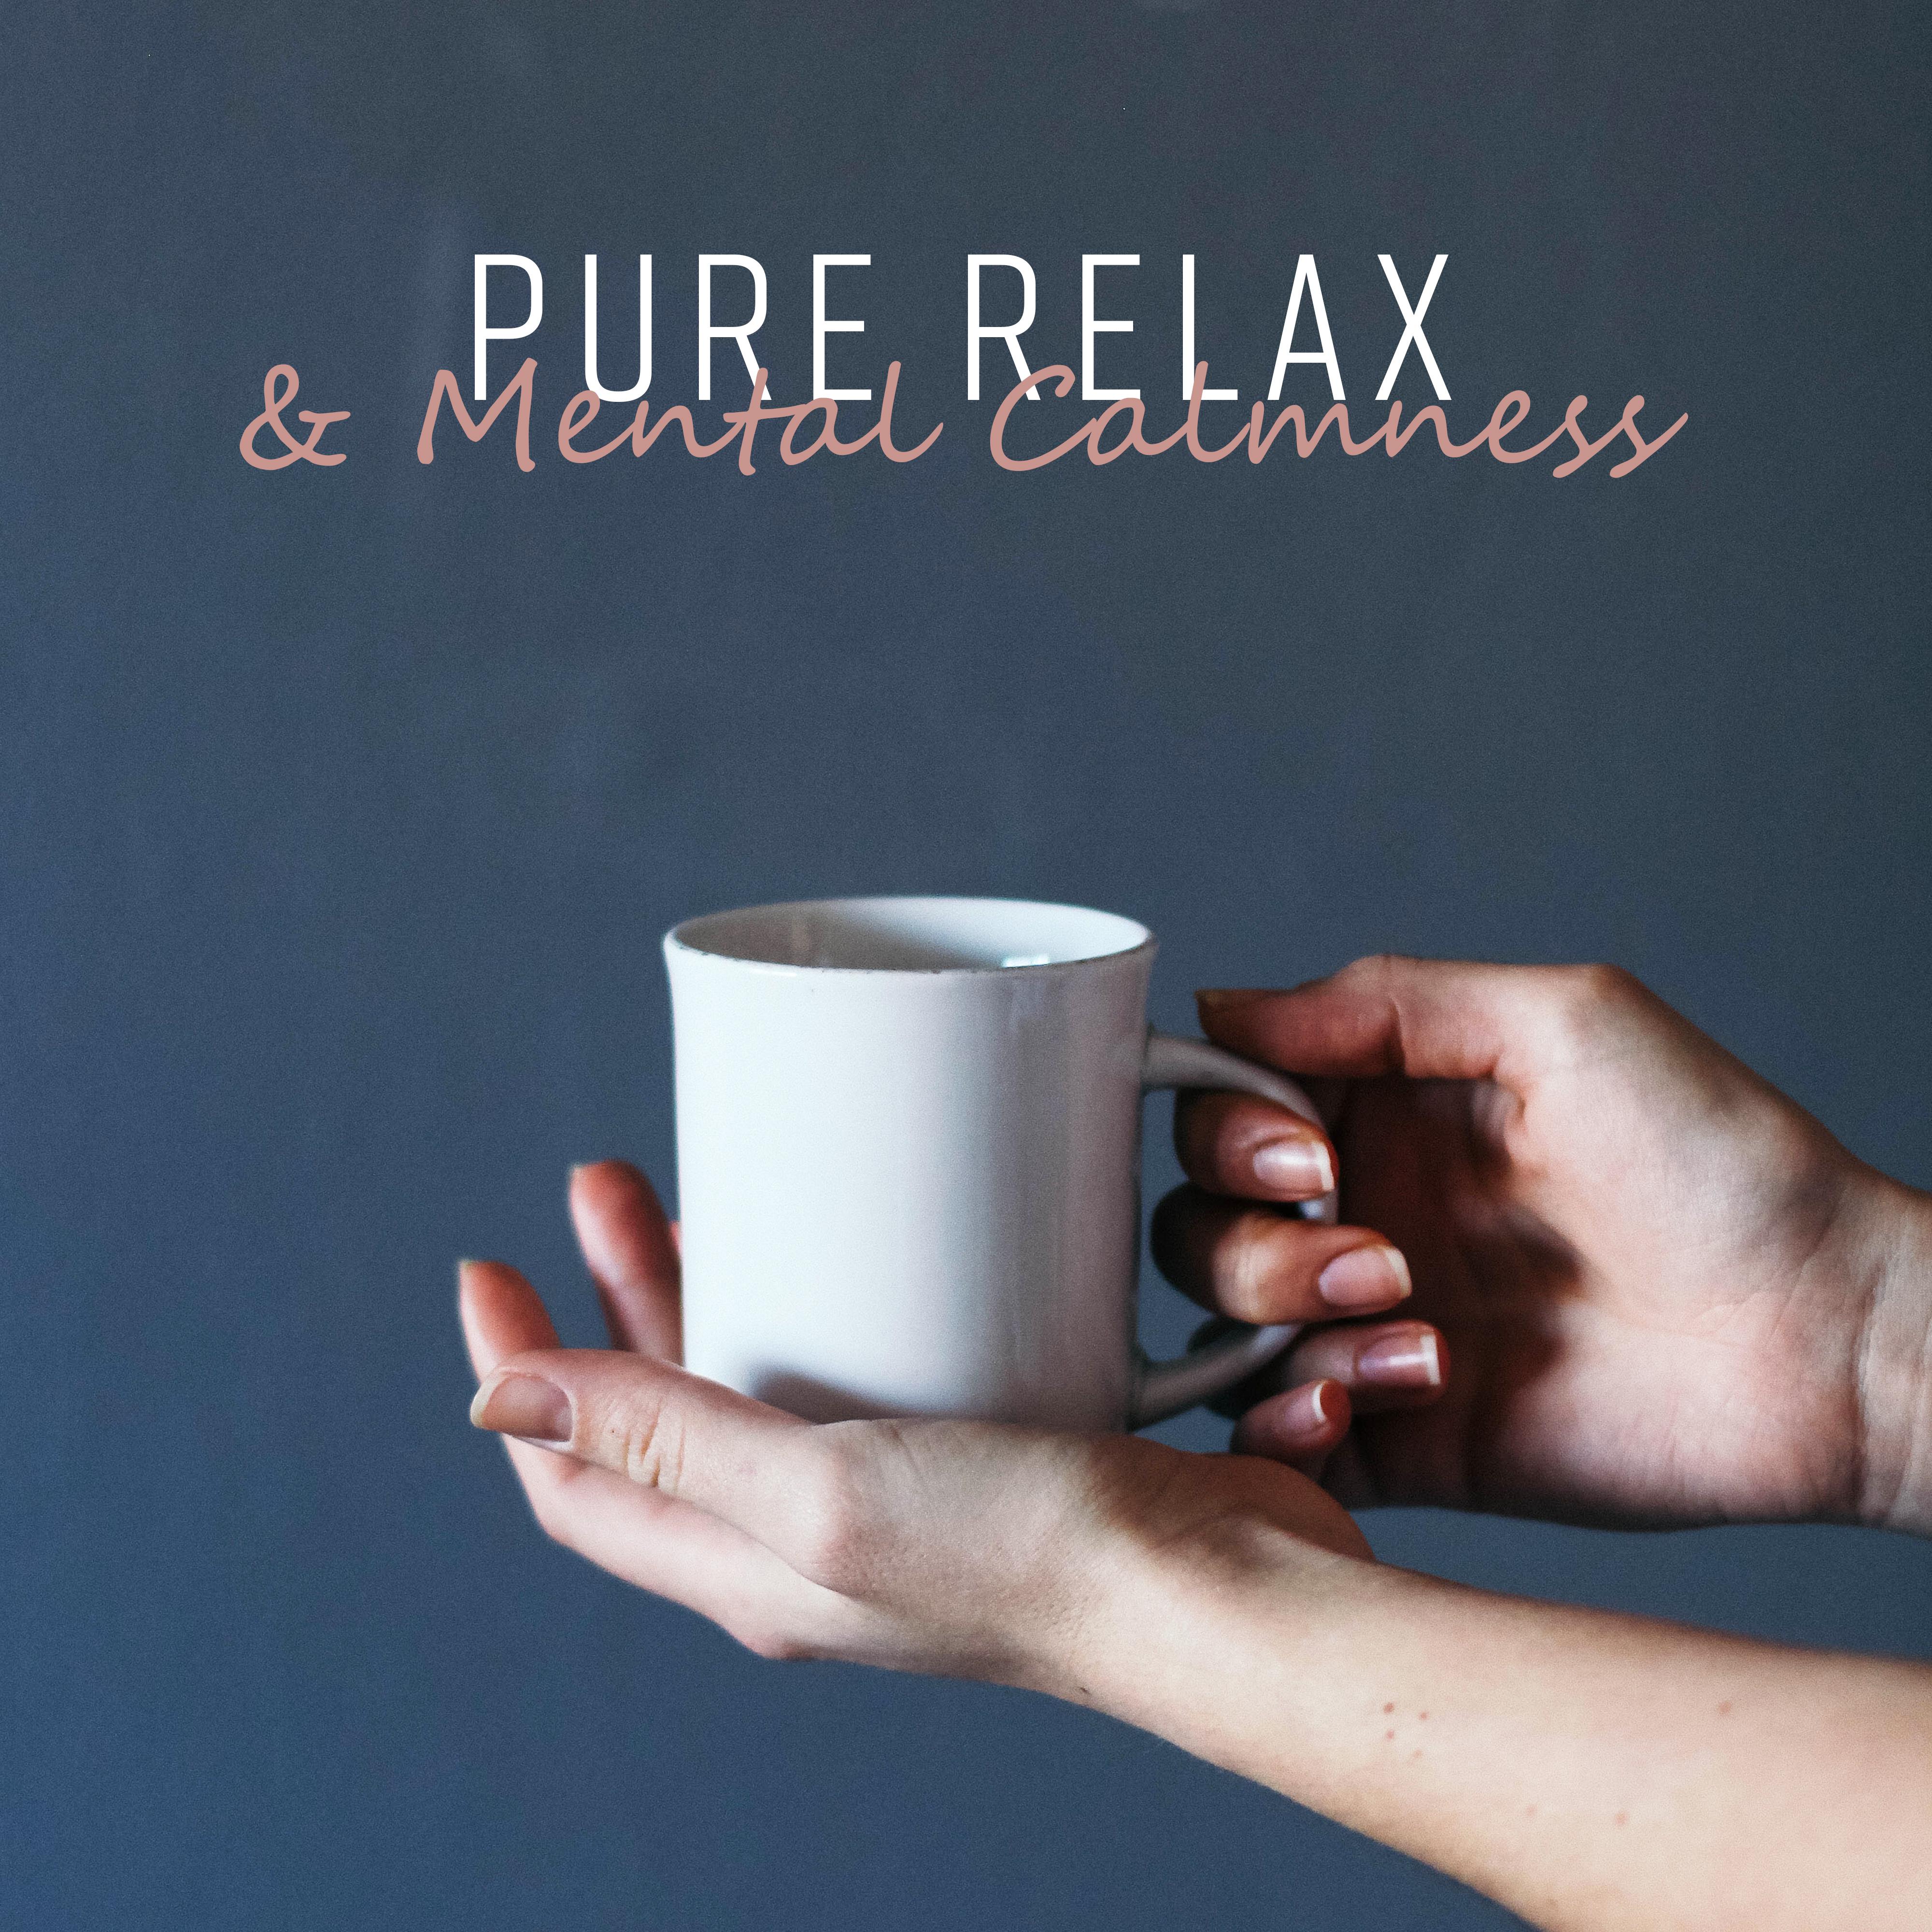 Pure Relax & Mental Calmness